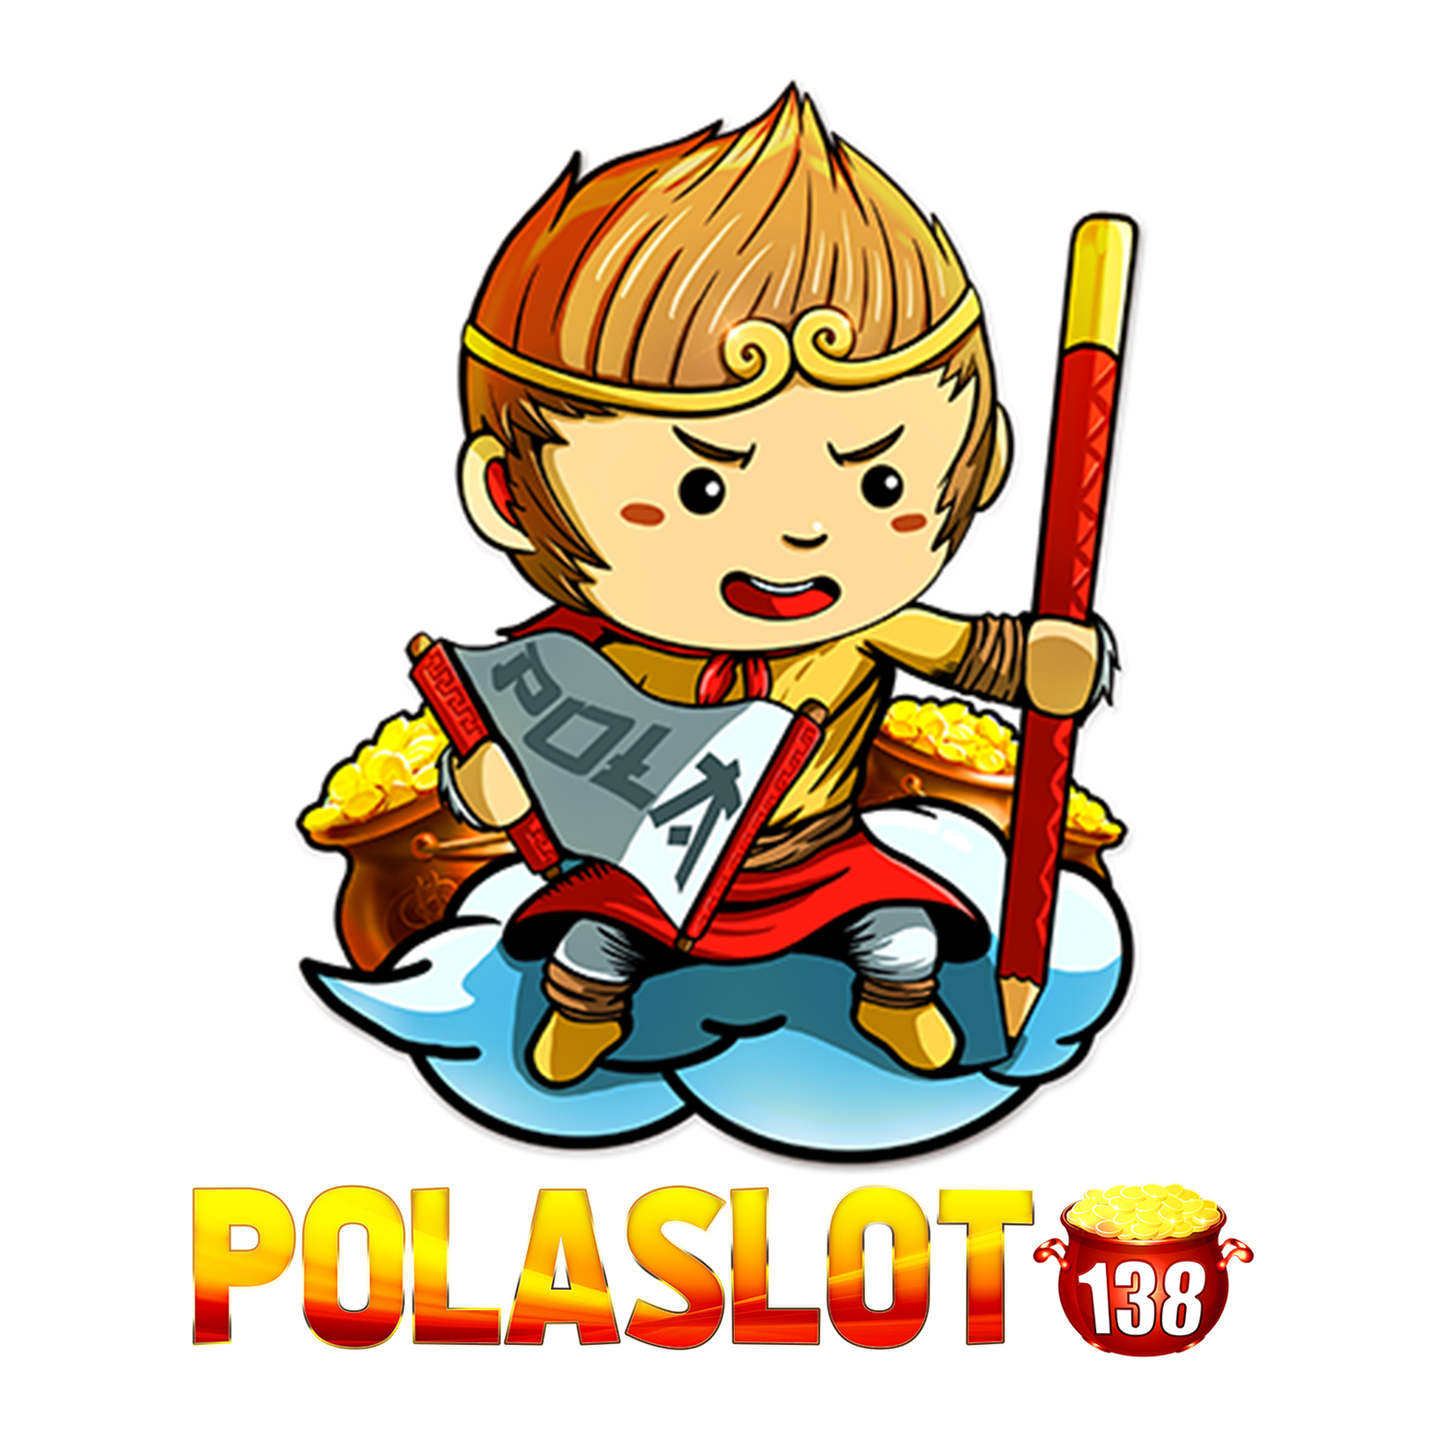 Polaslot138